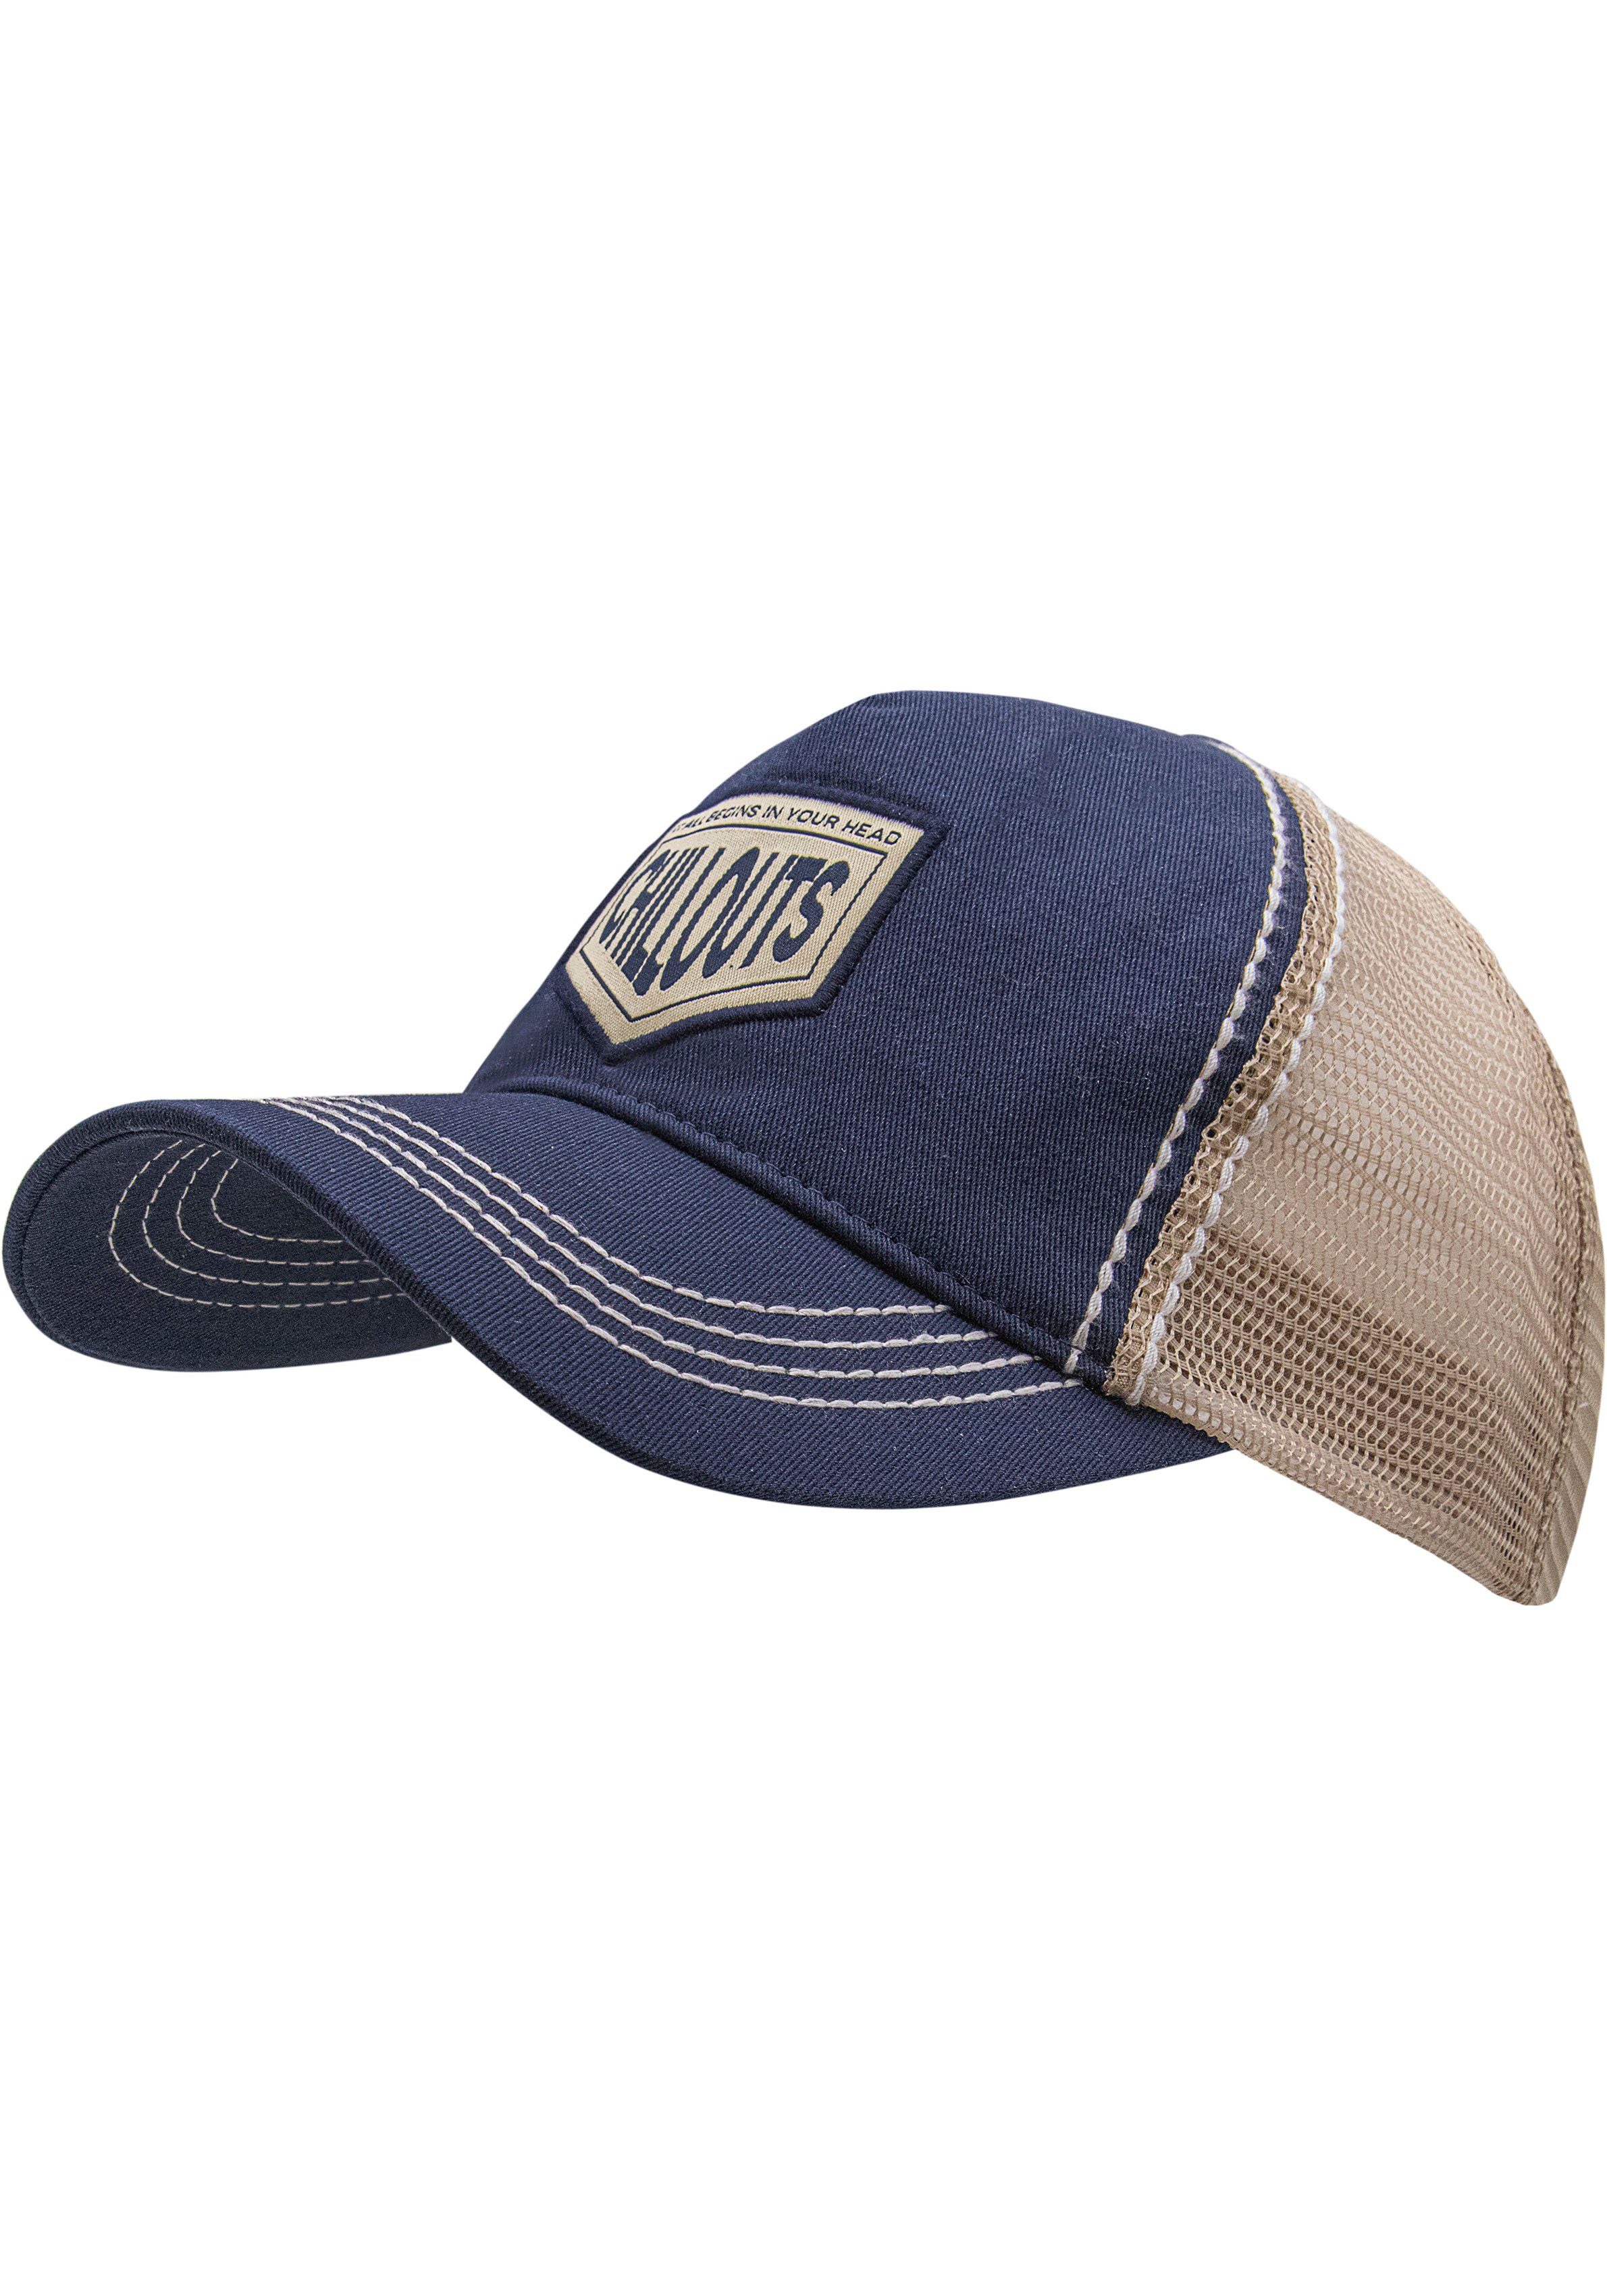 chillouts Baseball Cap Portsmouth Hat, Kontrastfarbene Steppnaht | Schiebermützen